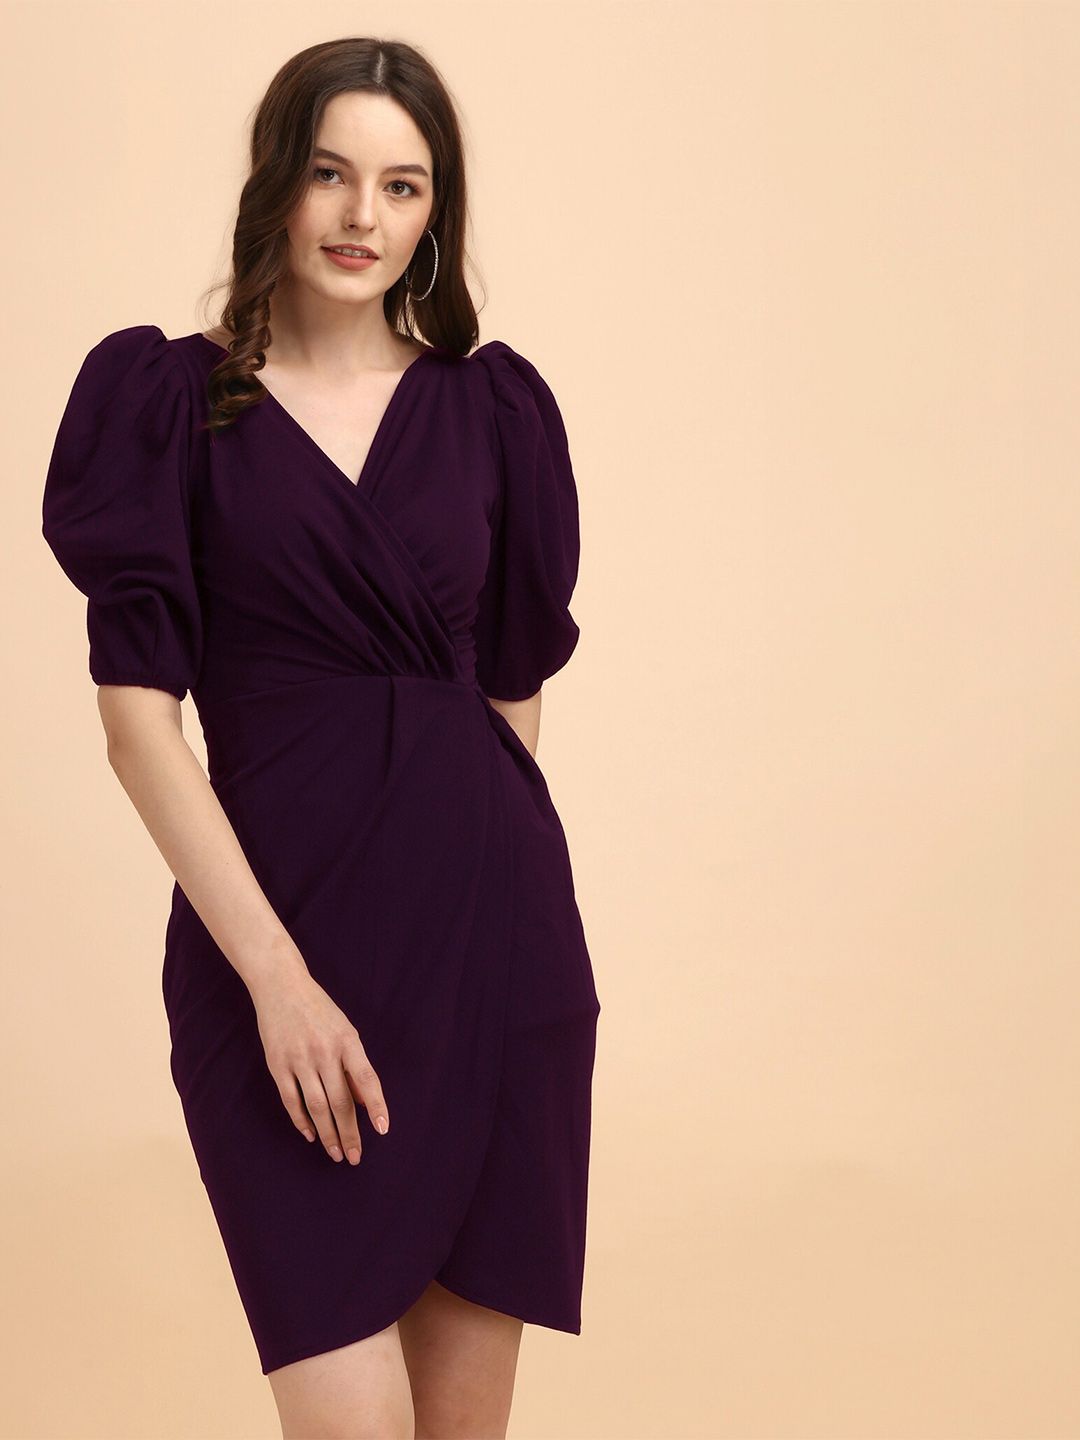 SHEETAL Associates Purple Dress Price in India